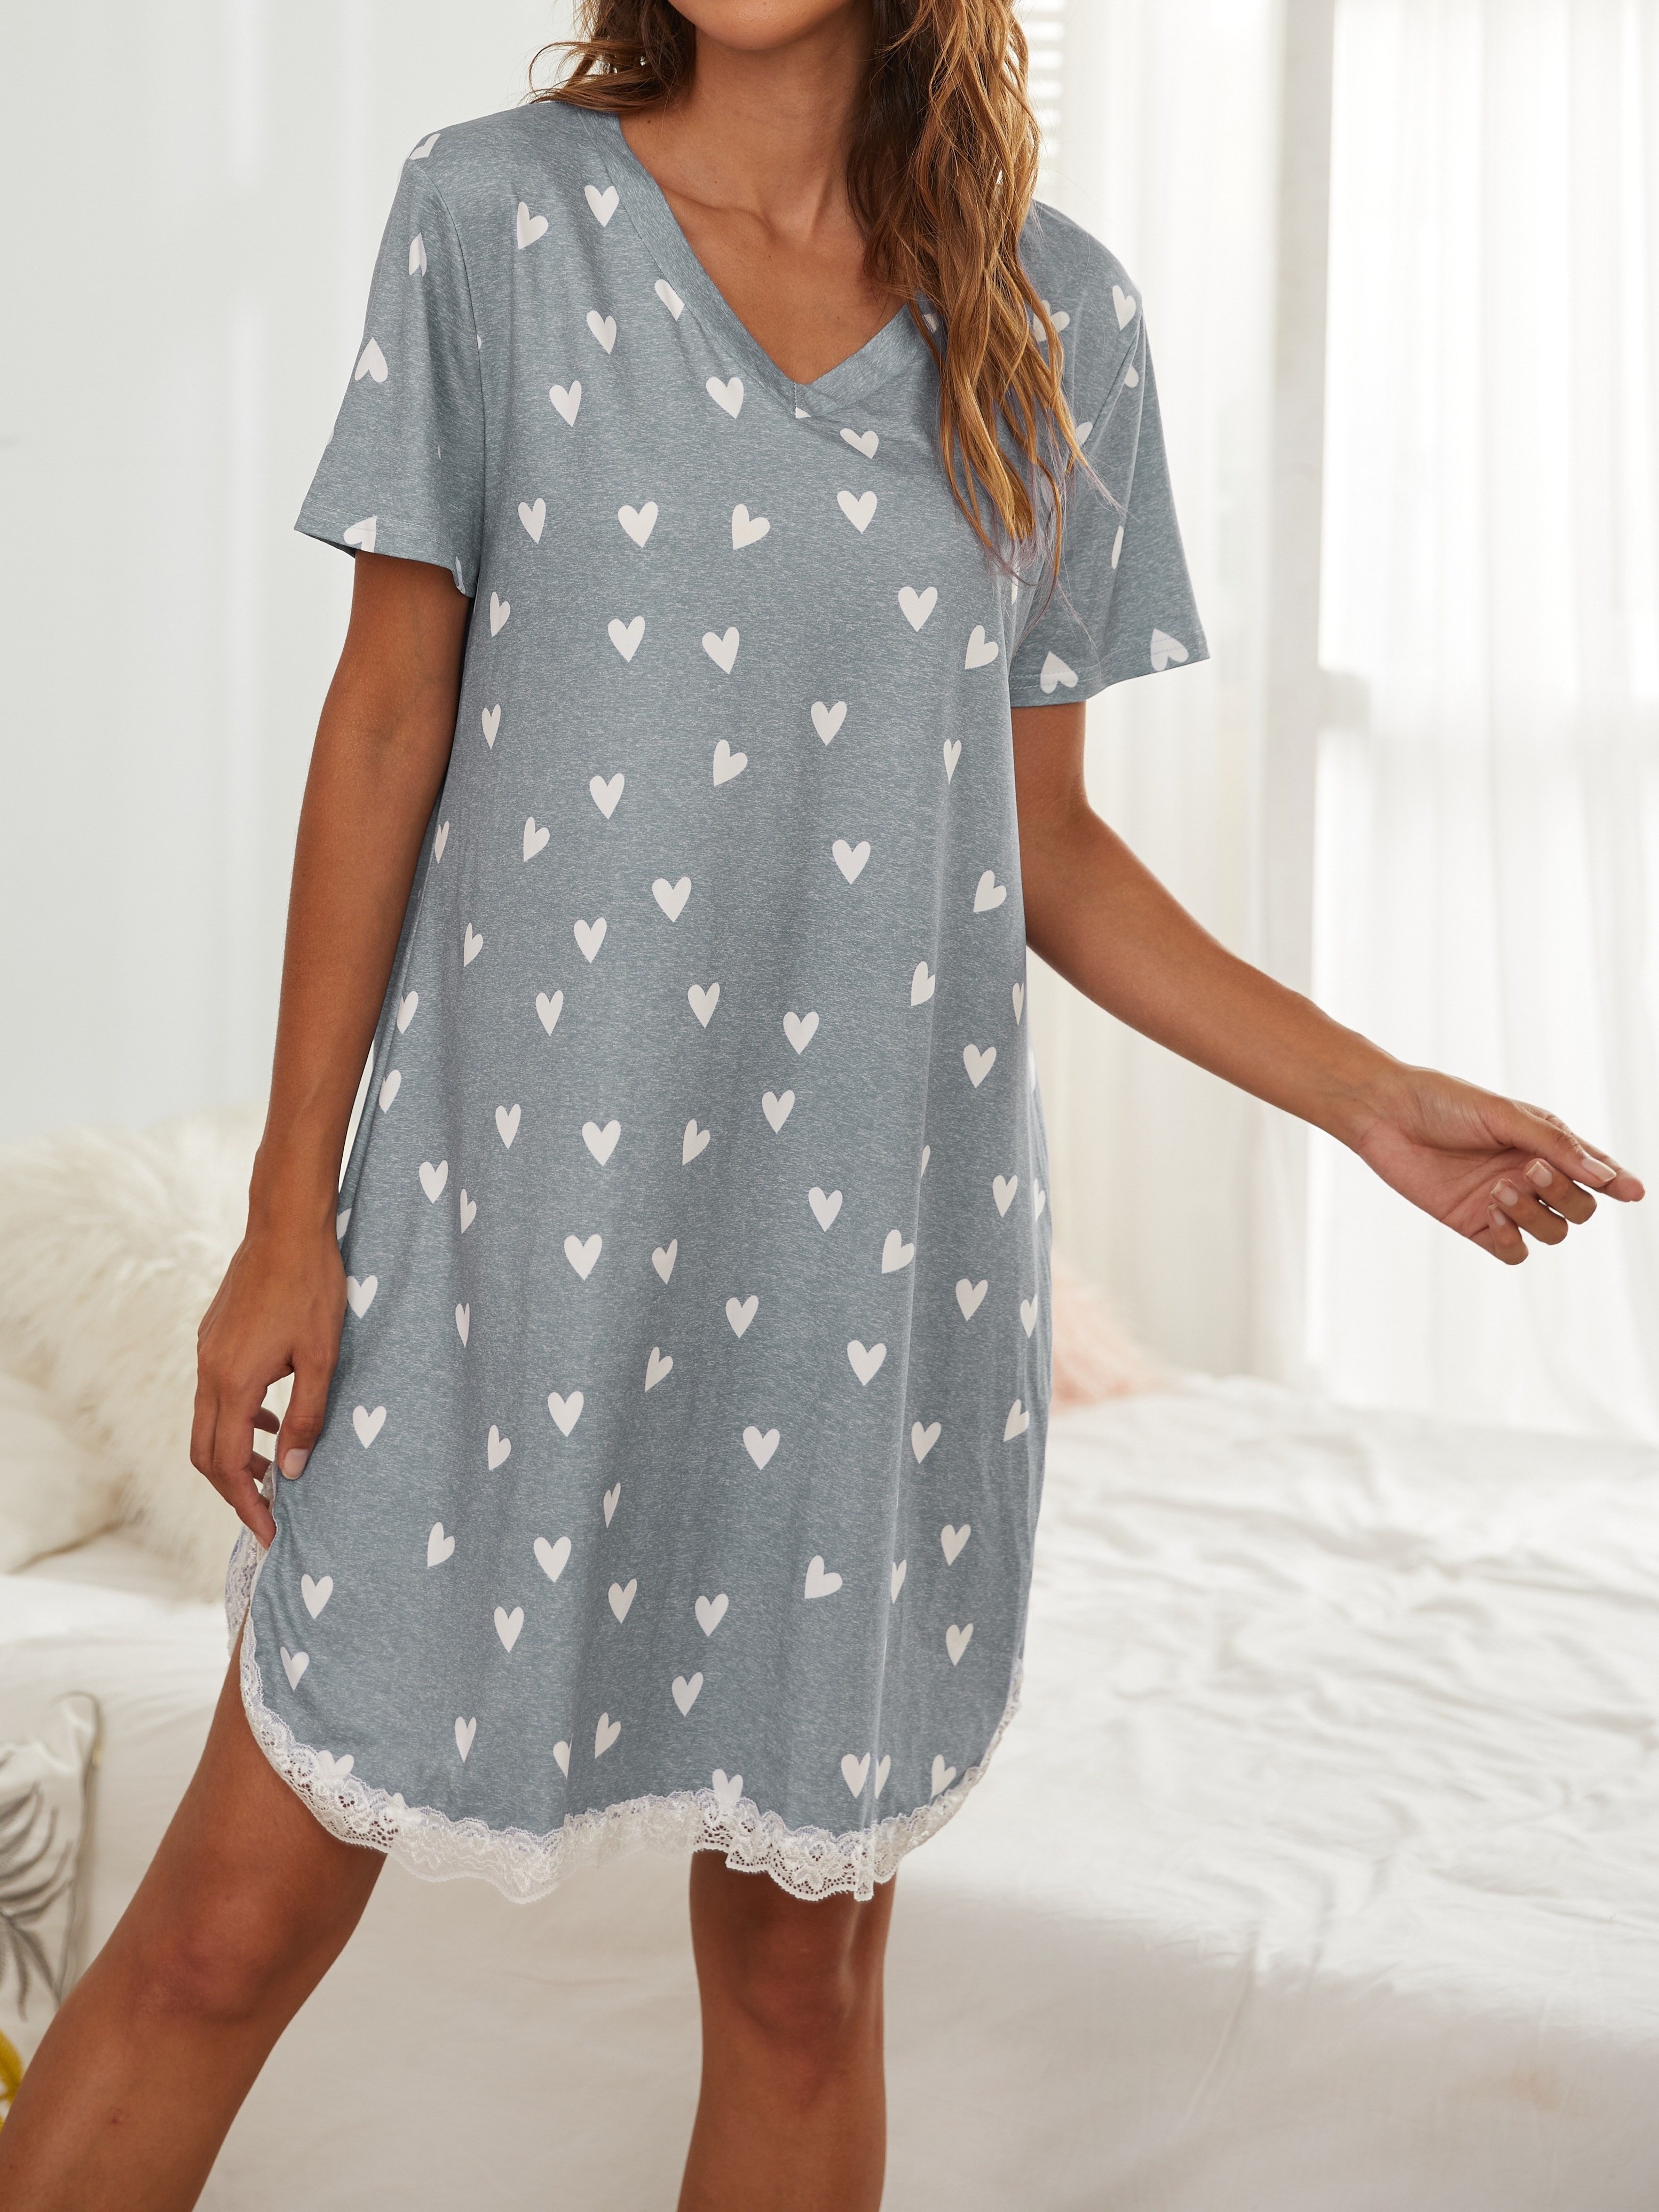 TAIPOVE Cotton Sleepwear Nightgowns Built in Bra w/Pockets